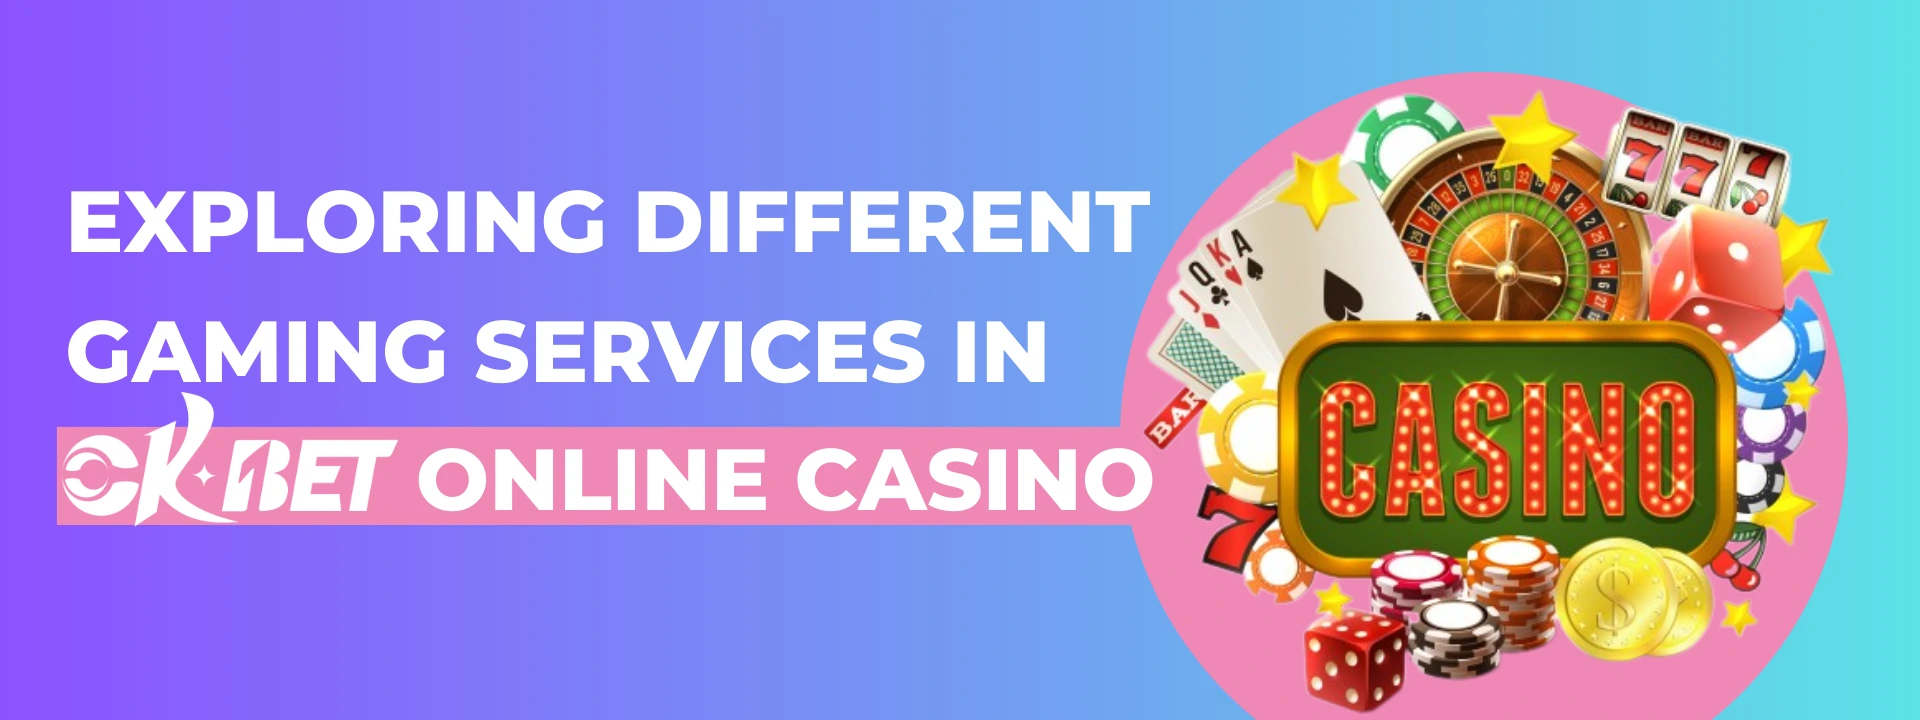 Exploring Different Gaming Services in OKBet Online Casino